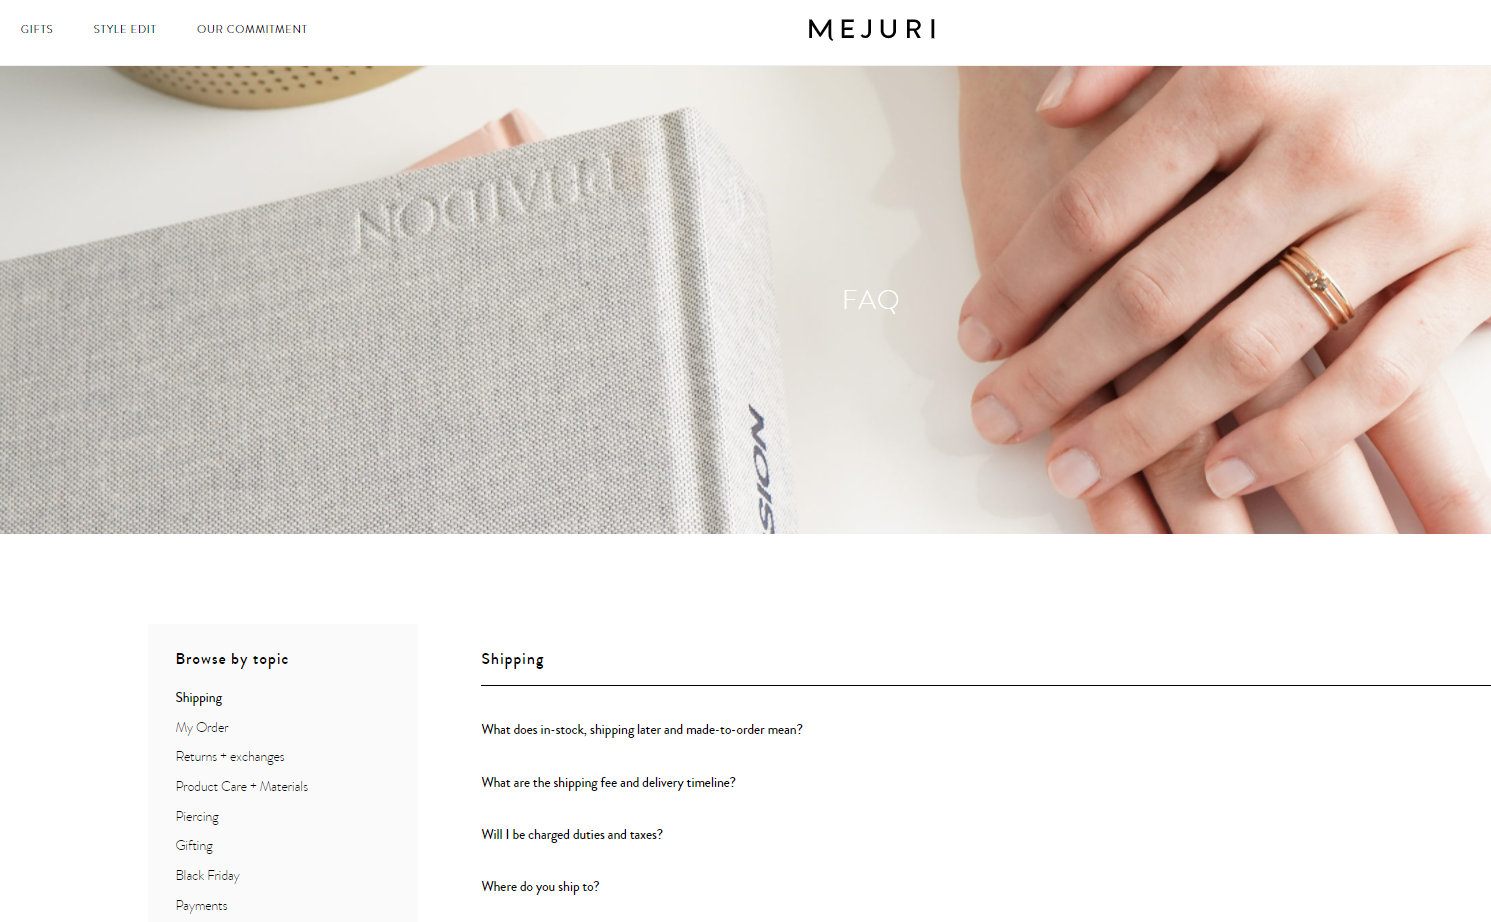 The Mejuri company has a minimalist FAQ page